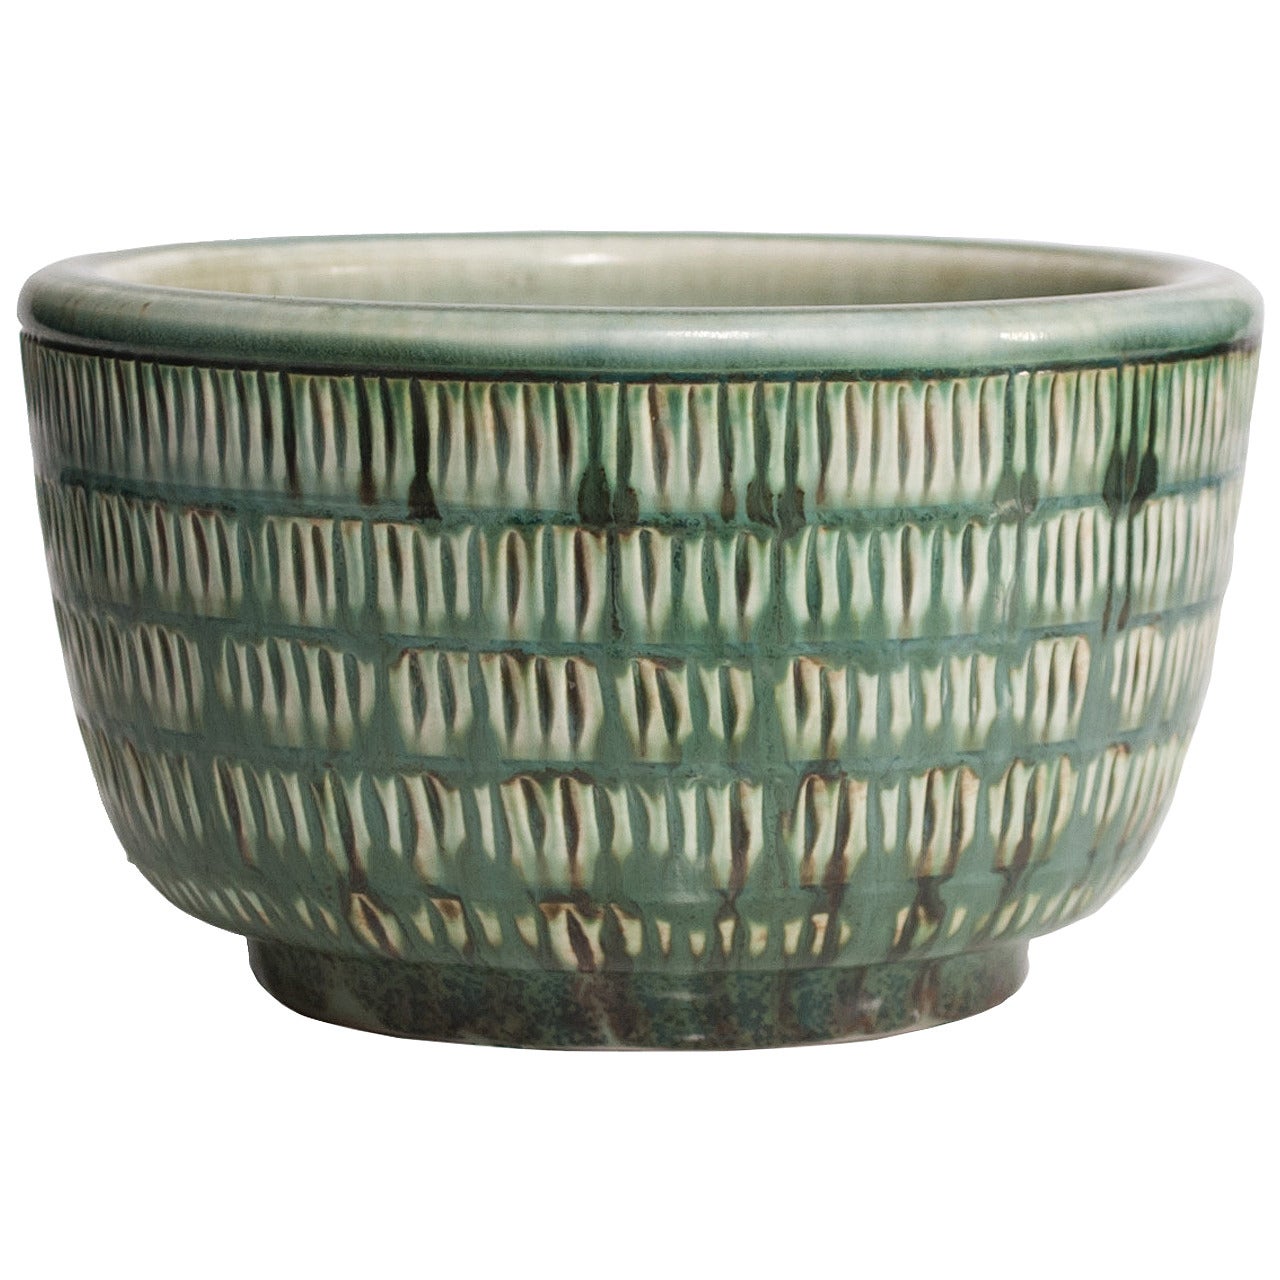 Swedish art deco ceramic bowl by Gertrud Lonegren in green glaze.